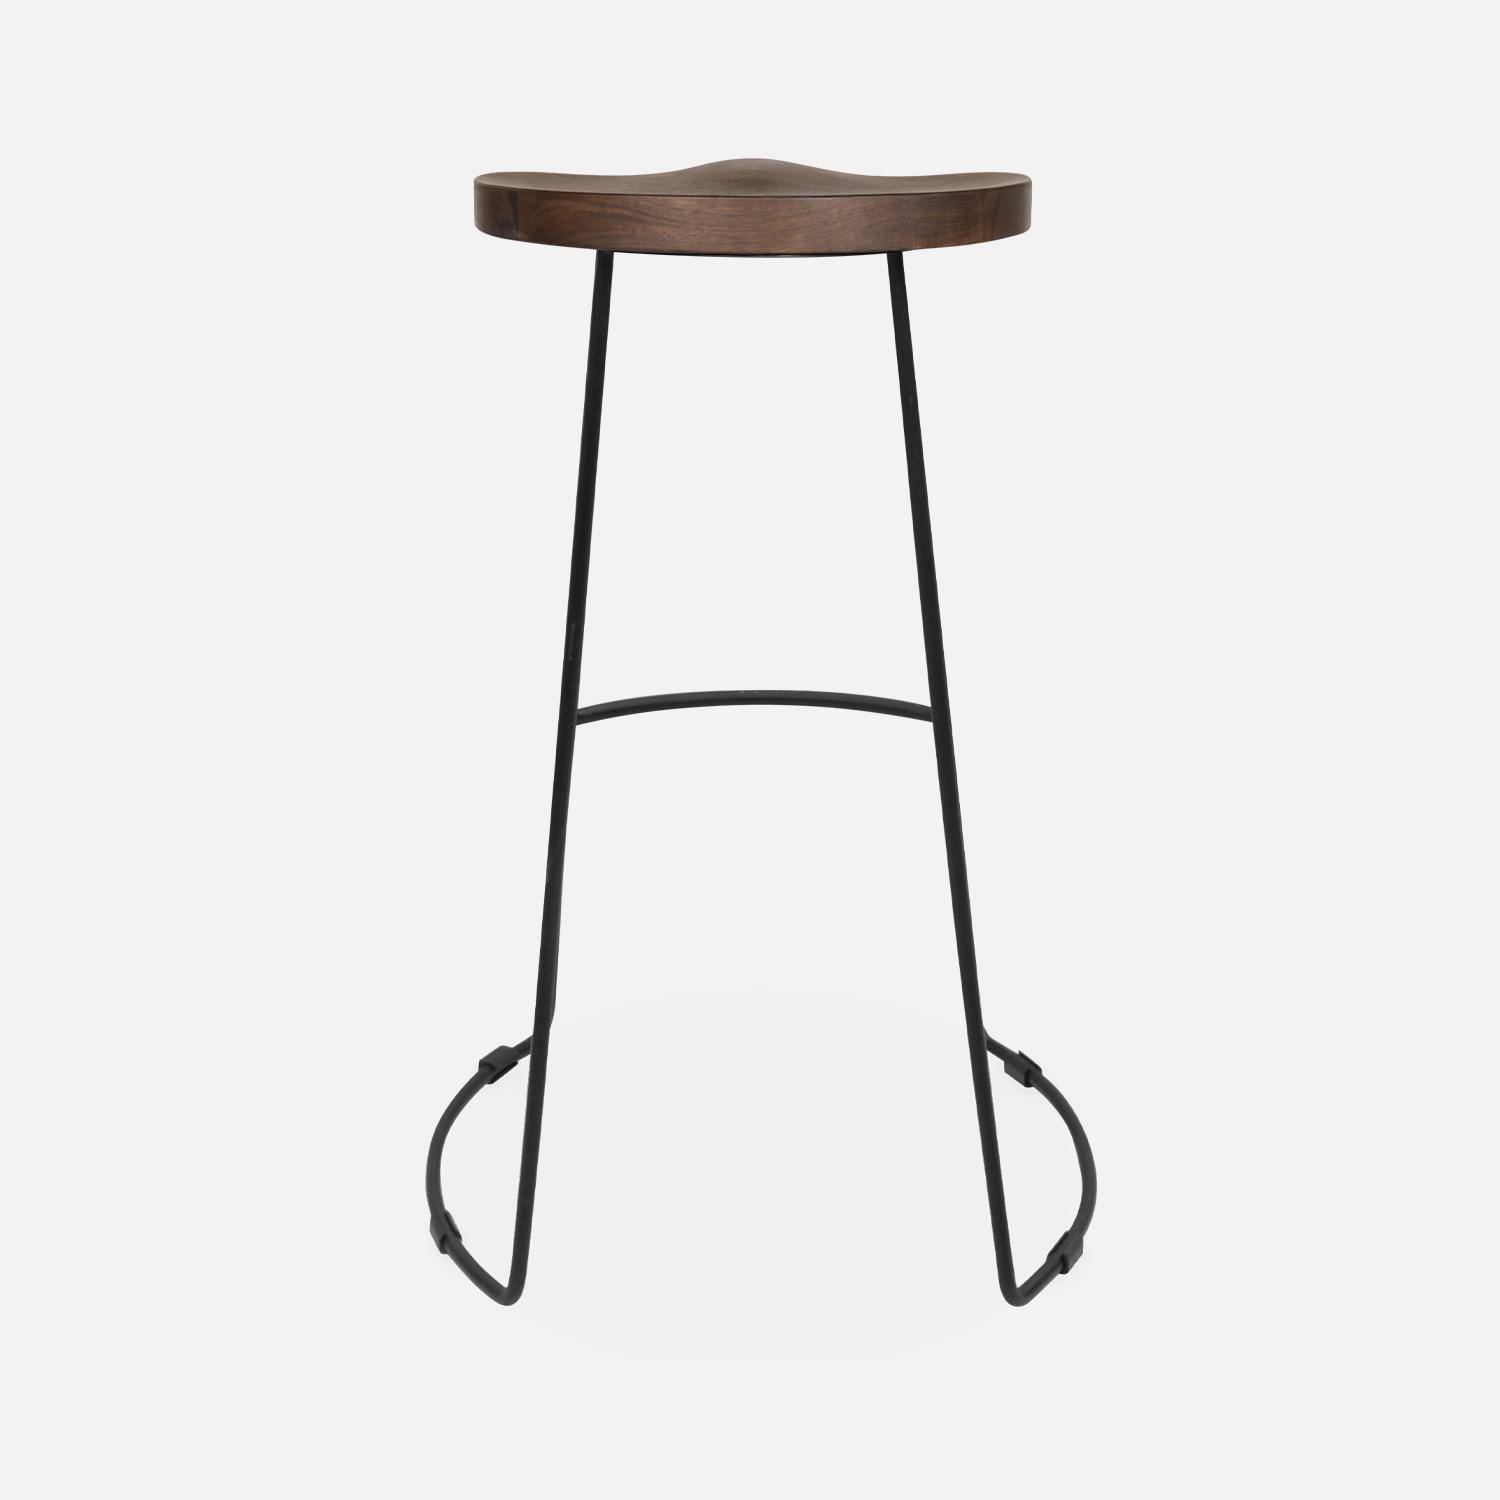 Set of 4 industrial metal and wooden bar stools, 47x40x75cm, Jaya, Light Walnut, Mango wood seat, black metal legs,sweeek,Photo6